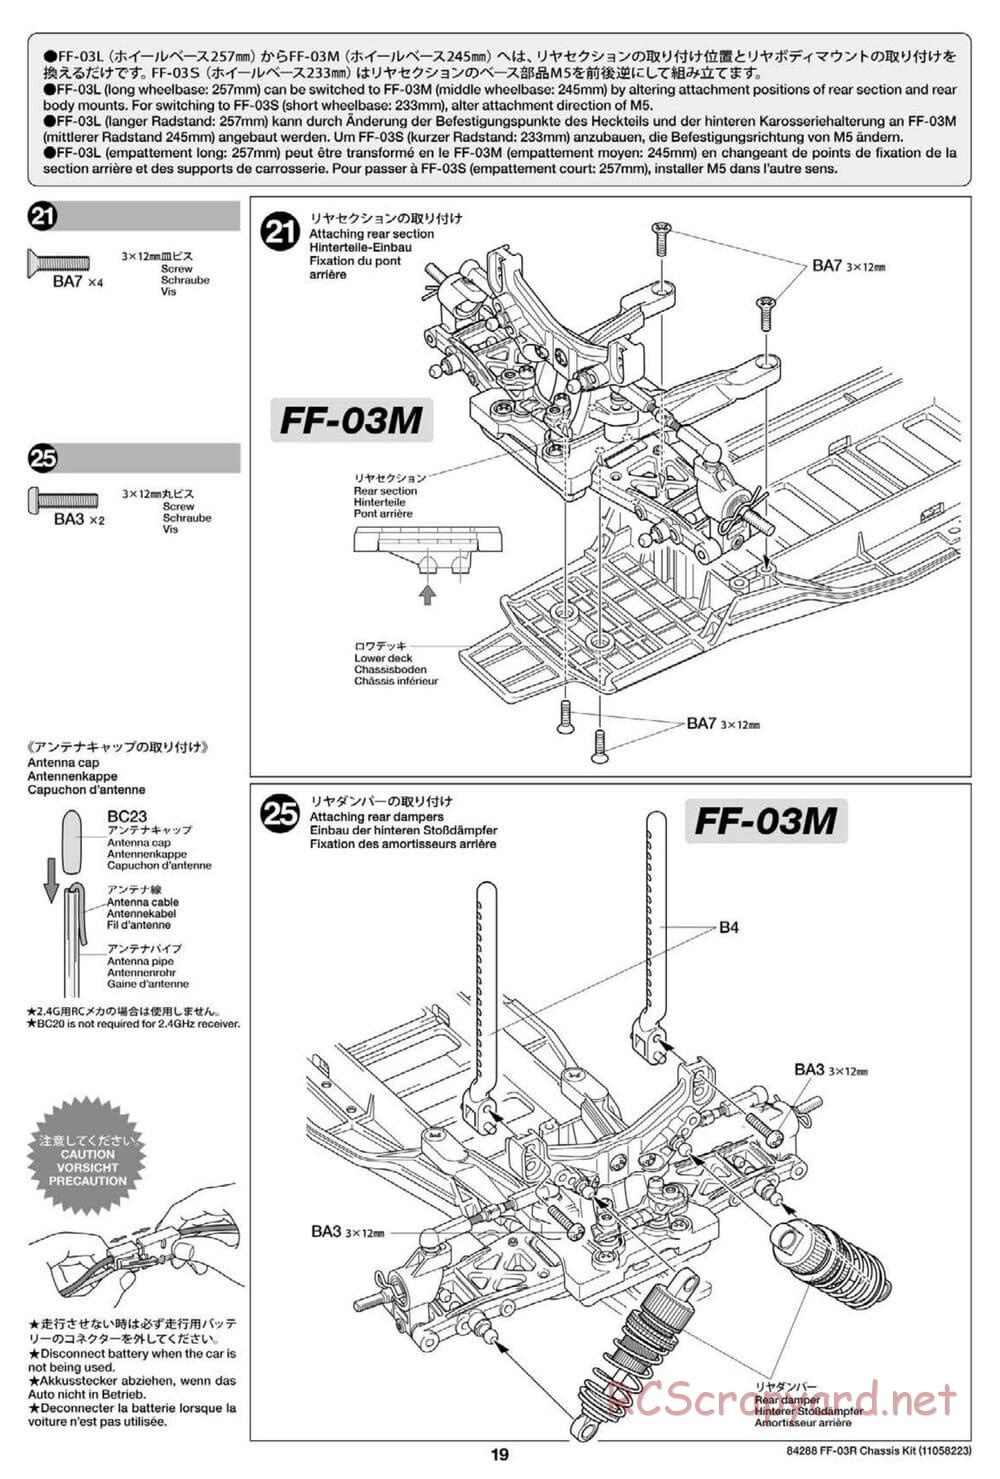 Tamiya - FF-03R Chassis - Manual - Page 21